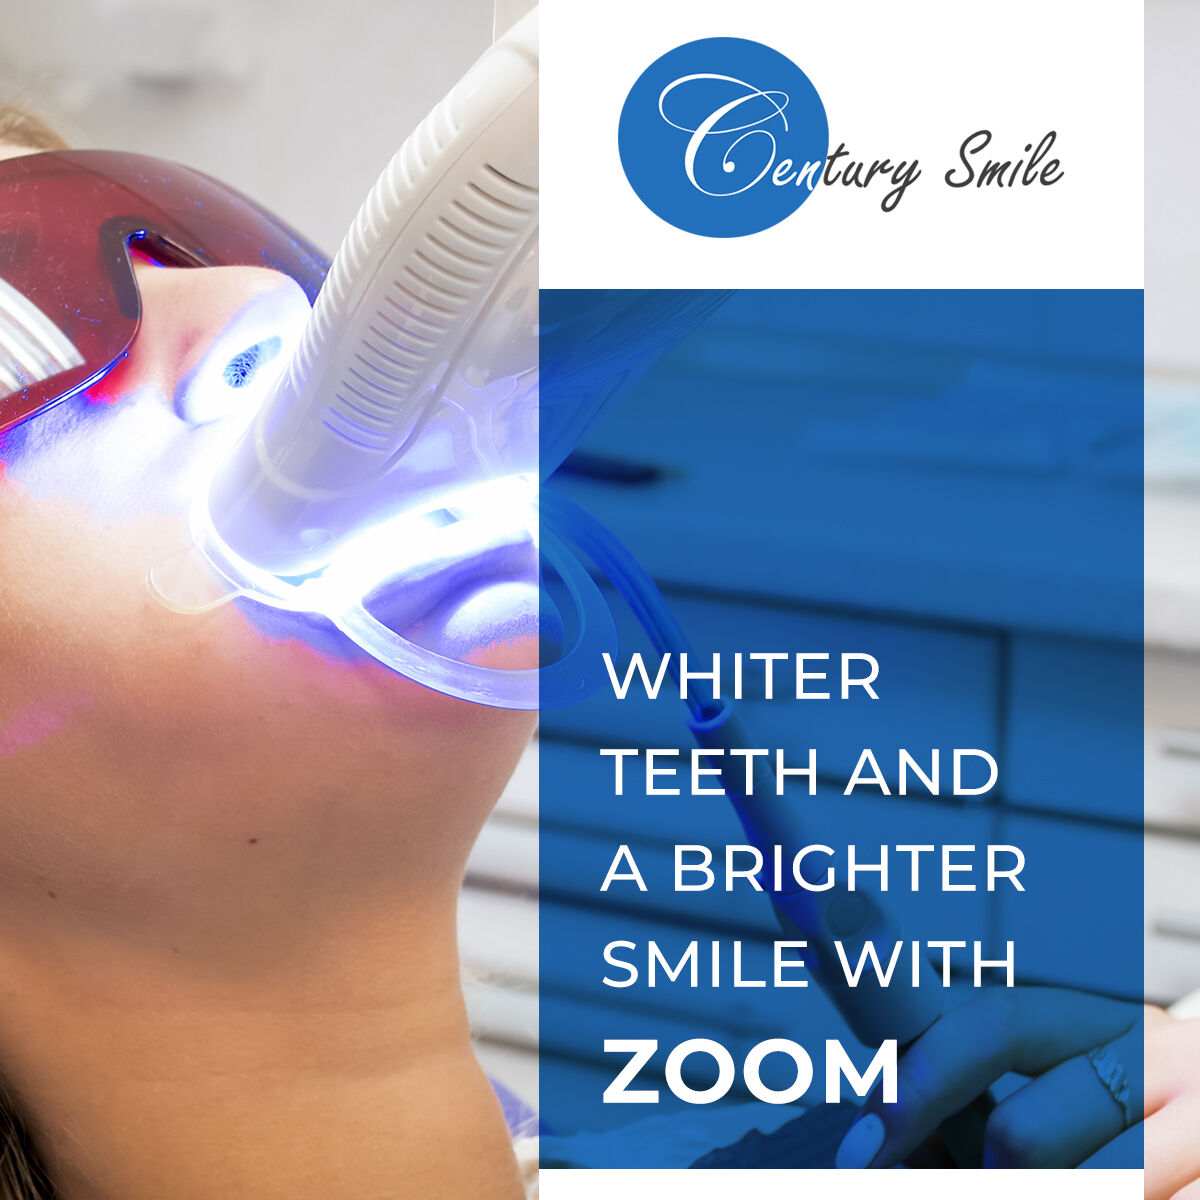 WHITER TEETH AND A BRIGHTER SMILE WITH ZOOM TEETH WHITENING - bit.ly/3MKkgkD

#zoomteethwhitening #zoom #zoomwhitening #dentistinculvercity #culvercity #DrMaryamTalaie #CenturySmileDental #dentist #culvercitydentist